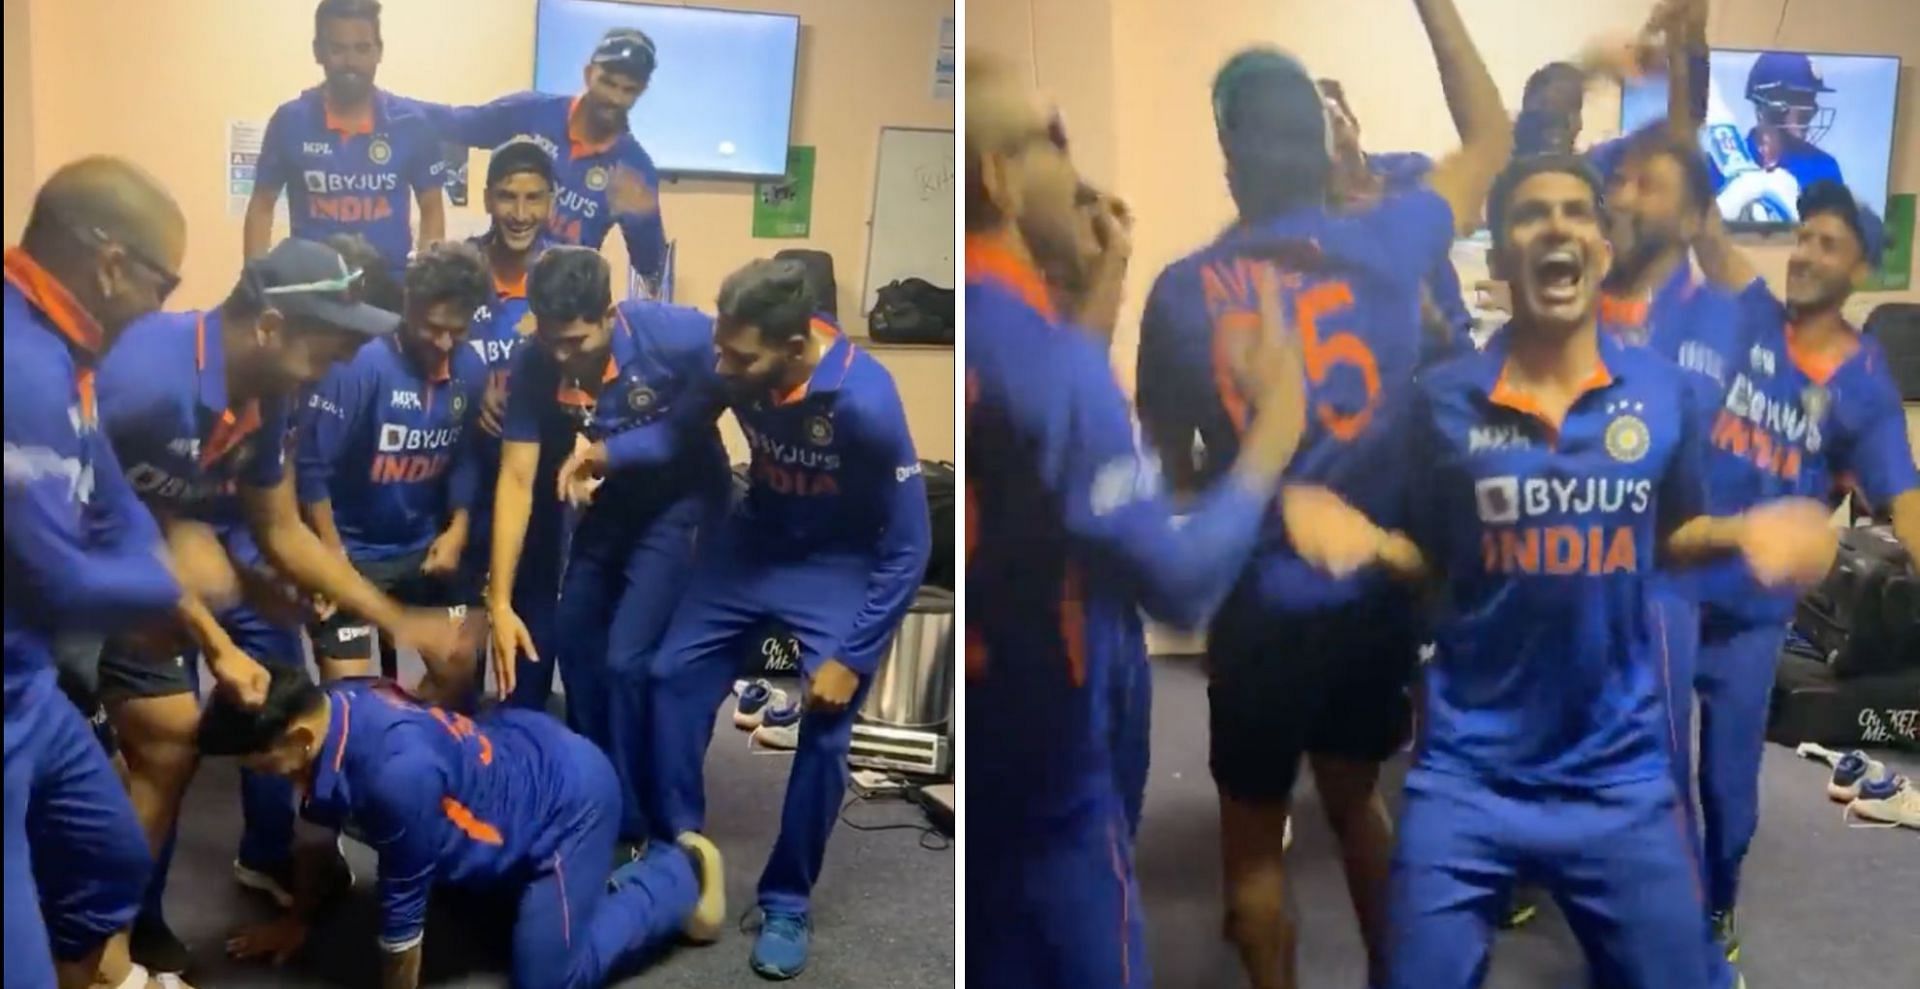 Indian thrashed Zimbabwe 3-0 to win the ODI series. (Credit: Twitter)